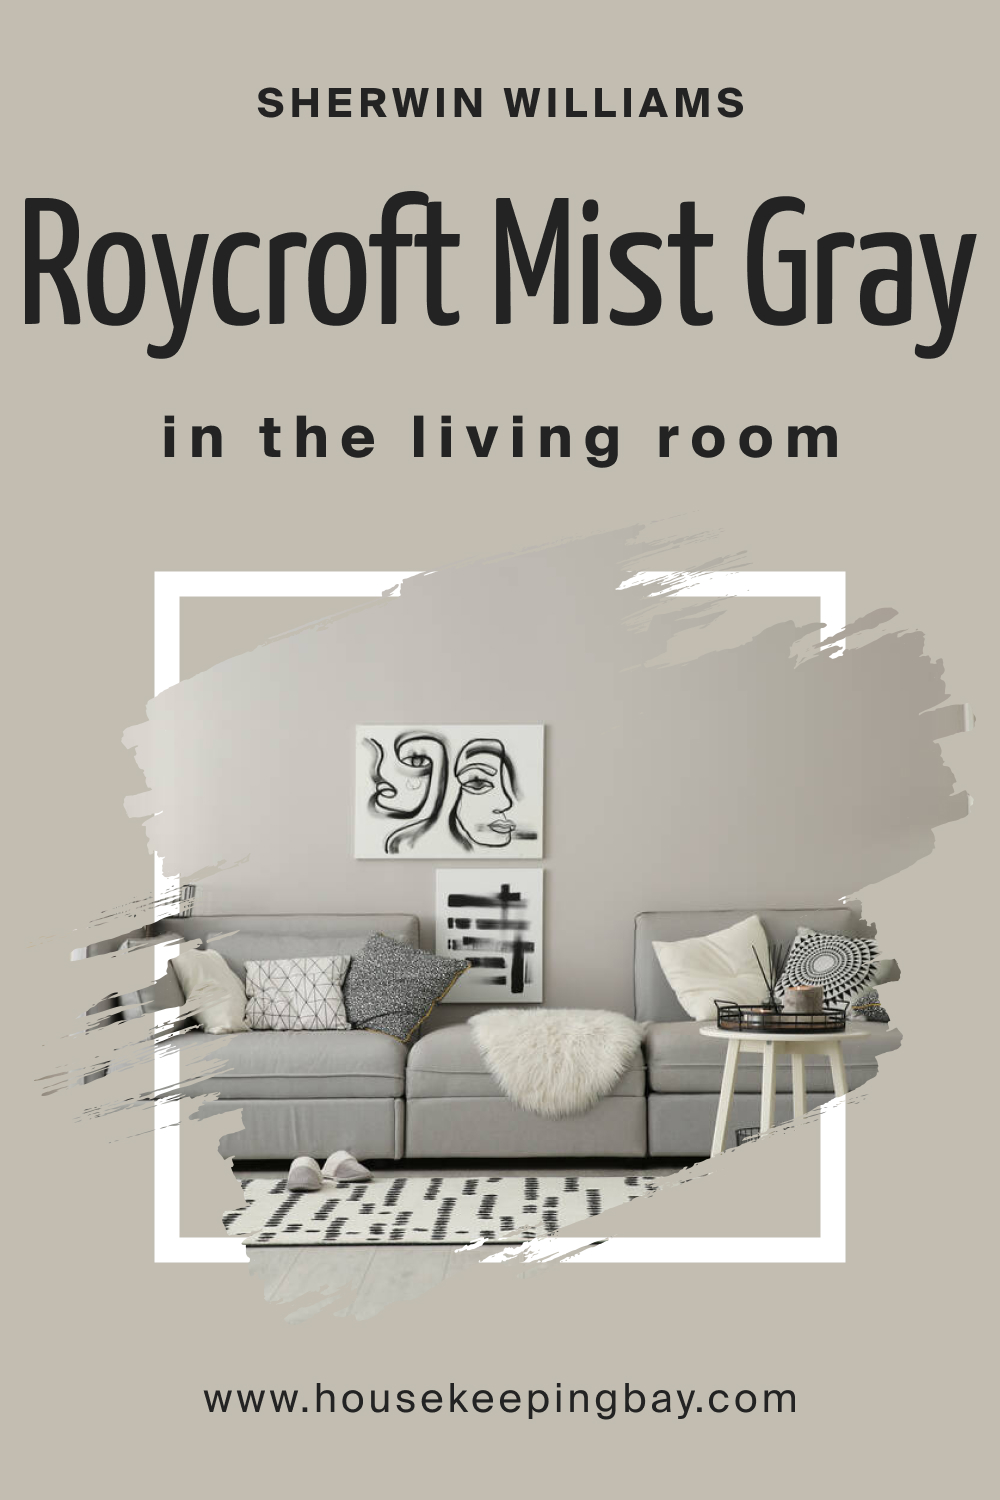 Sherwin Williams. SW 2844 Roycroft Mist Gray In the Living Room